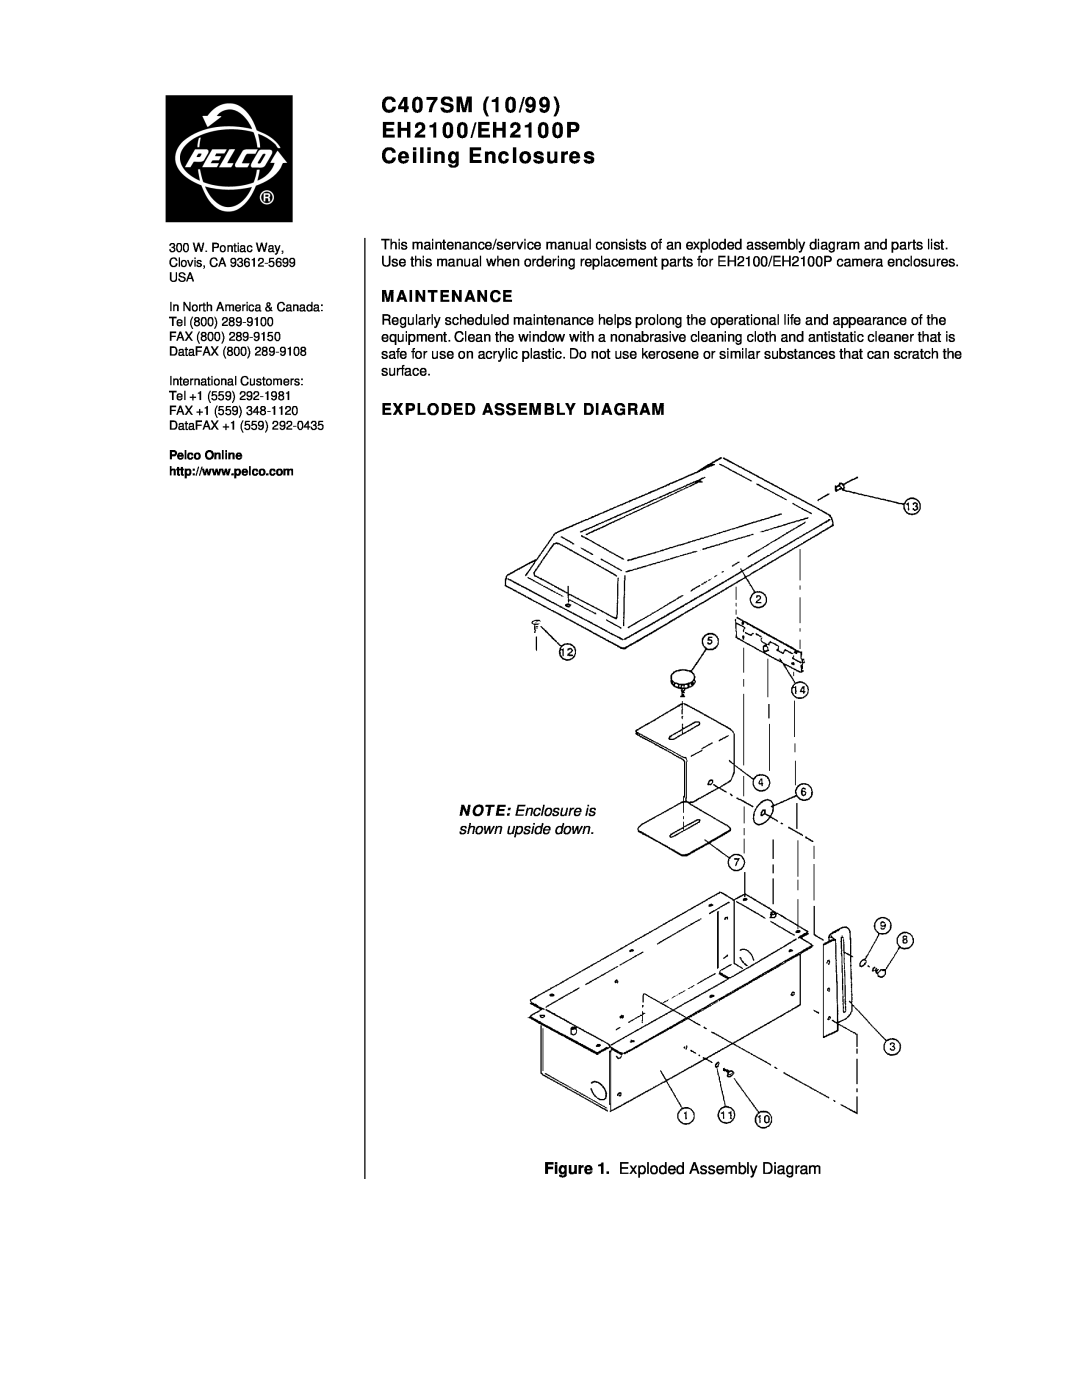 Pelco service manual Maintenance, Exploded Assembly Diagram, C407SM 10/99 EH2100/EH2100P Ceiling Enclosures 